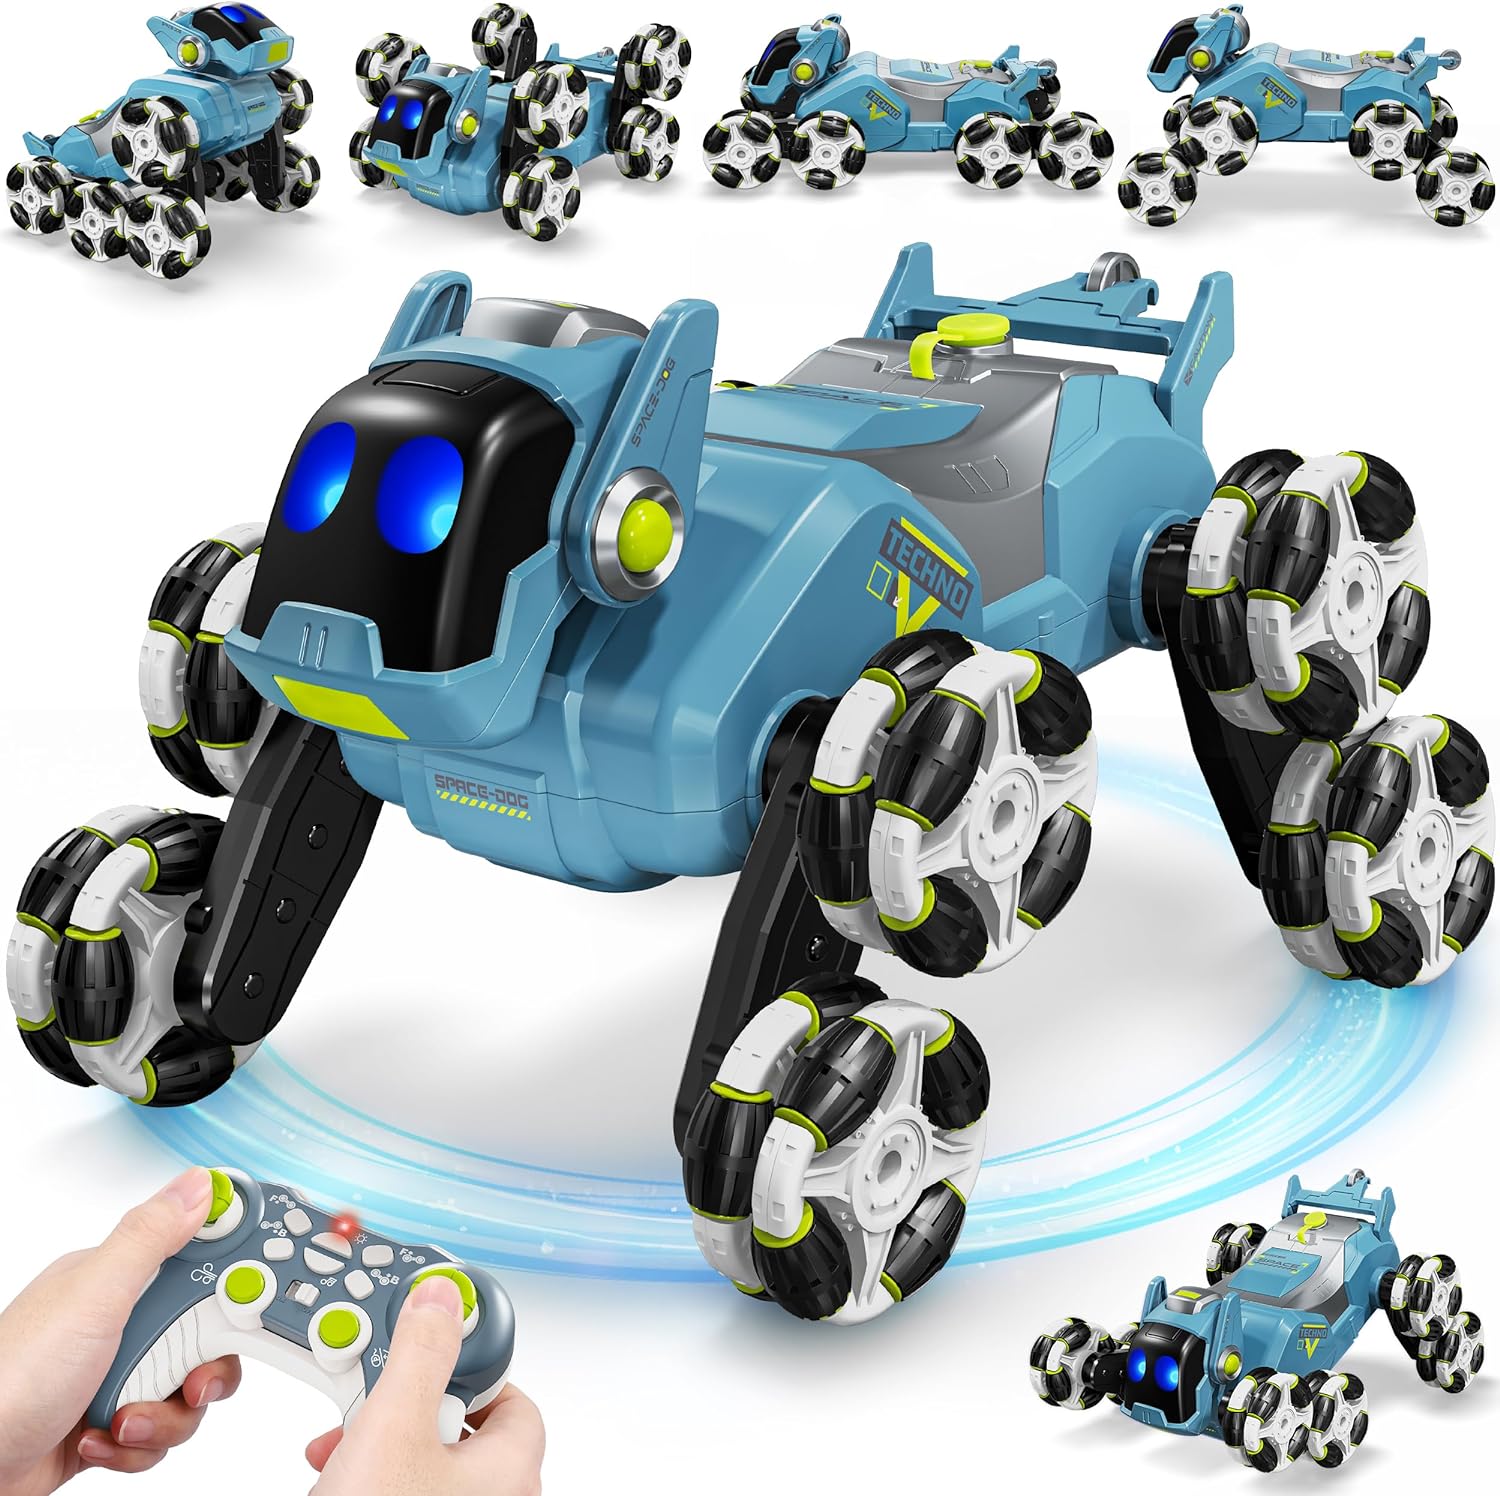 Robot dog remote control car toy